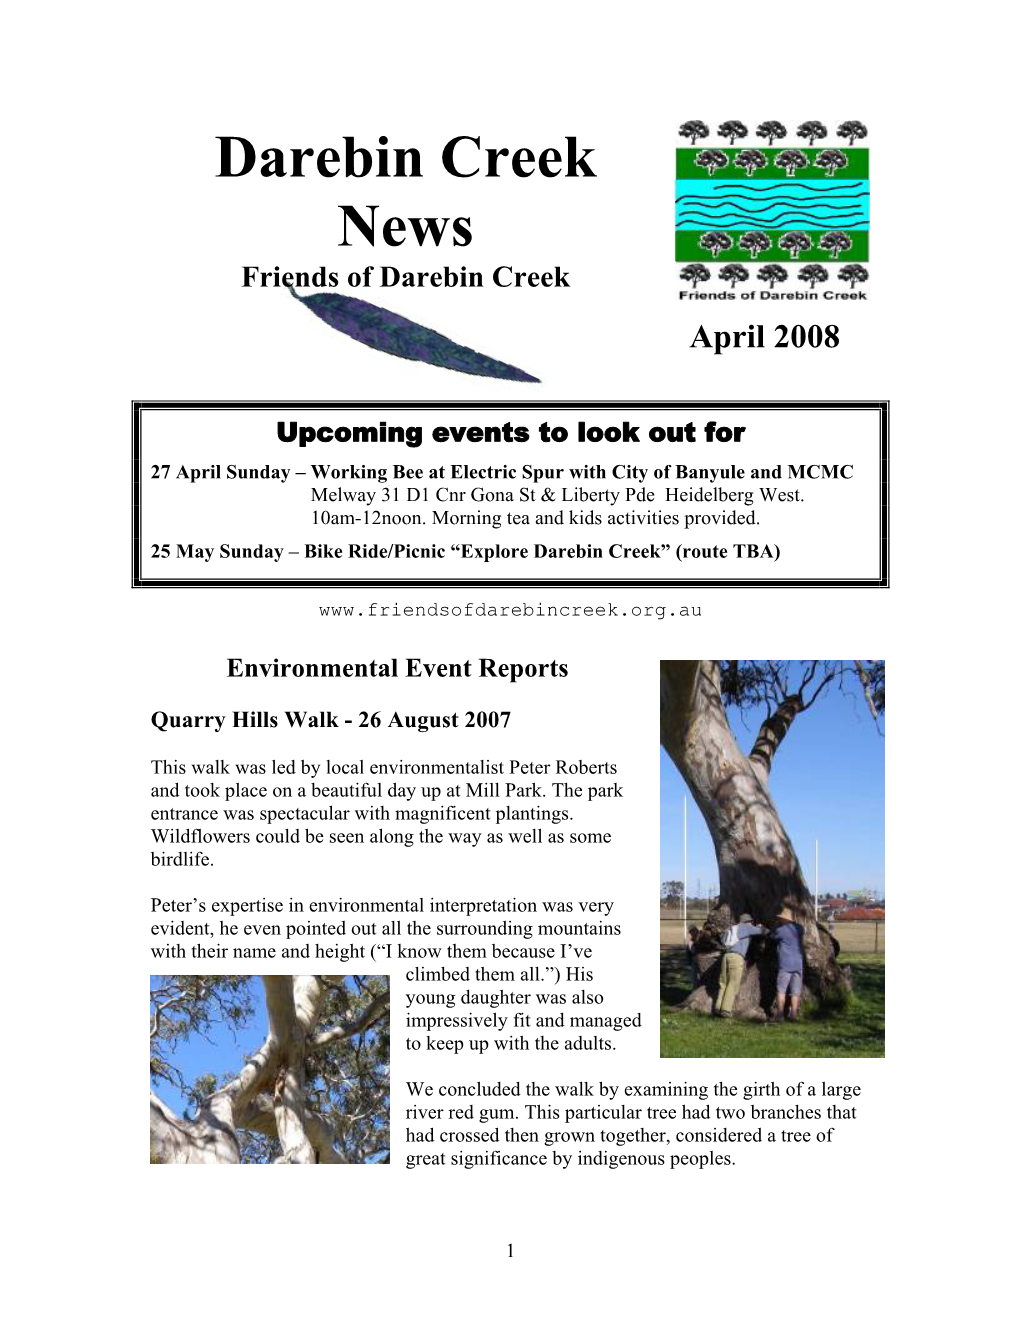 Darebin Creek News Friends of Darebin Creek